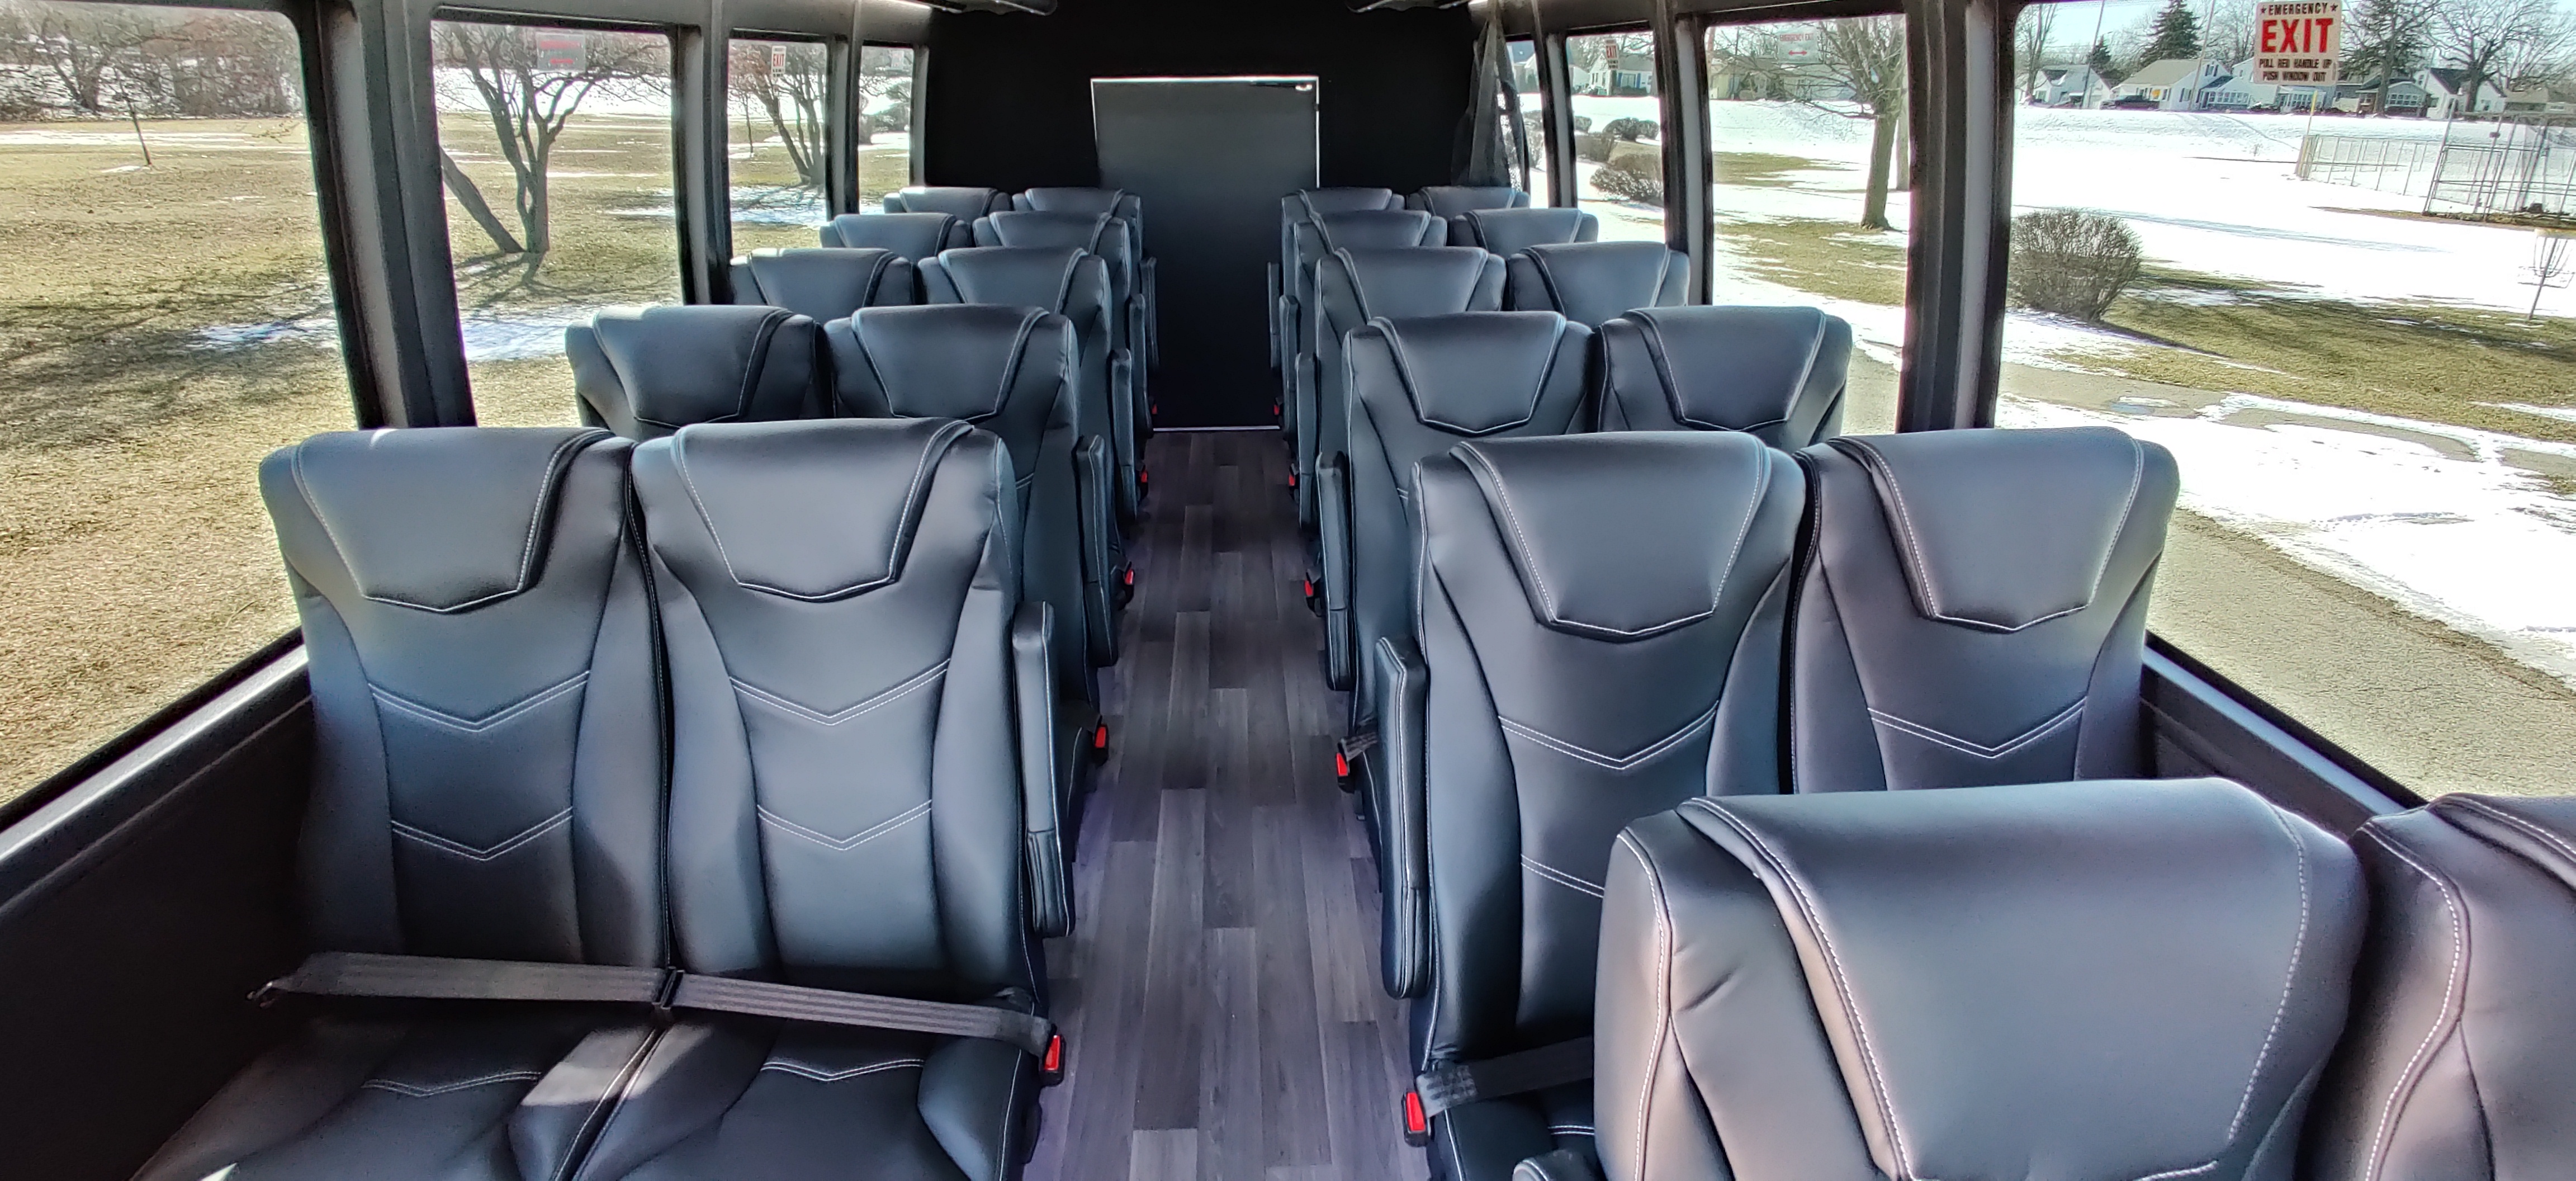 26 Passenger Executive Shuttle Bus Interior 2